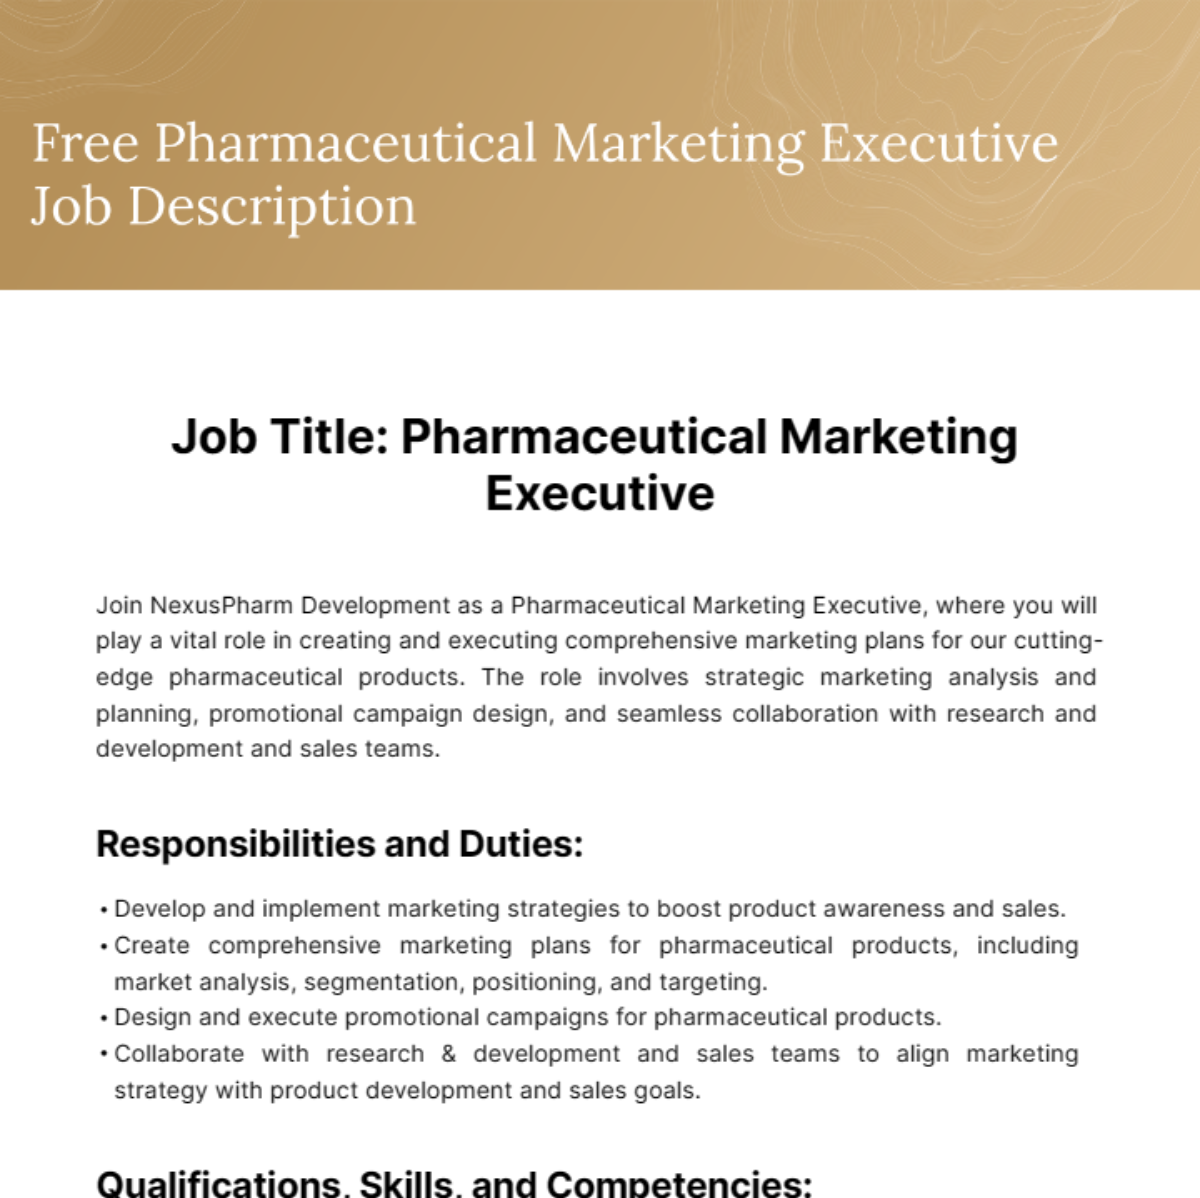 Free Pharmaceutical Marketing Executive Job Description Template